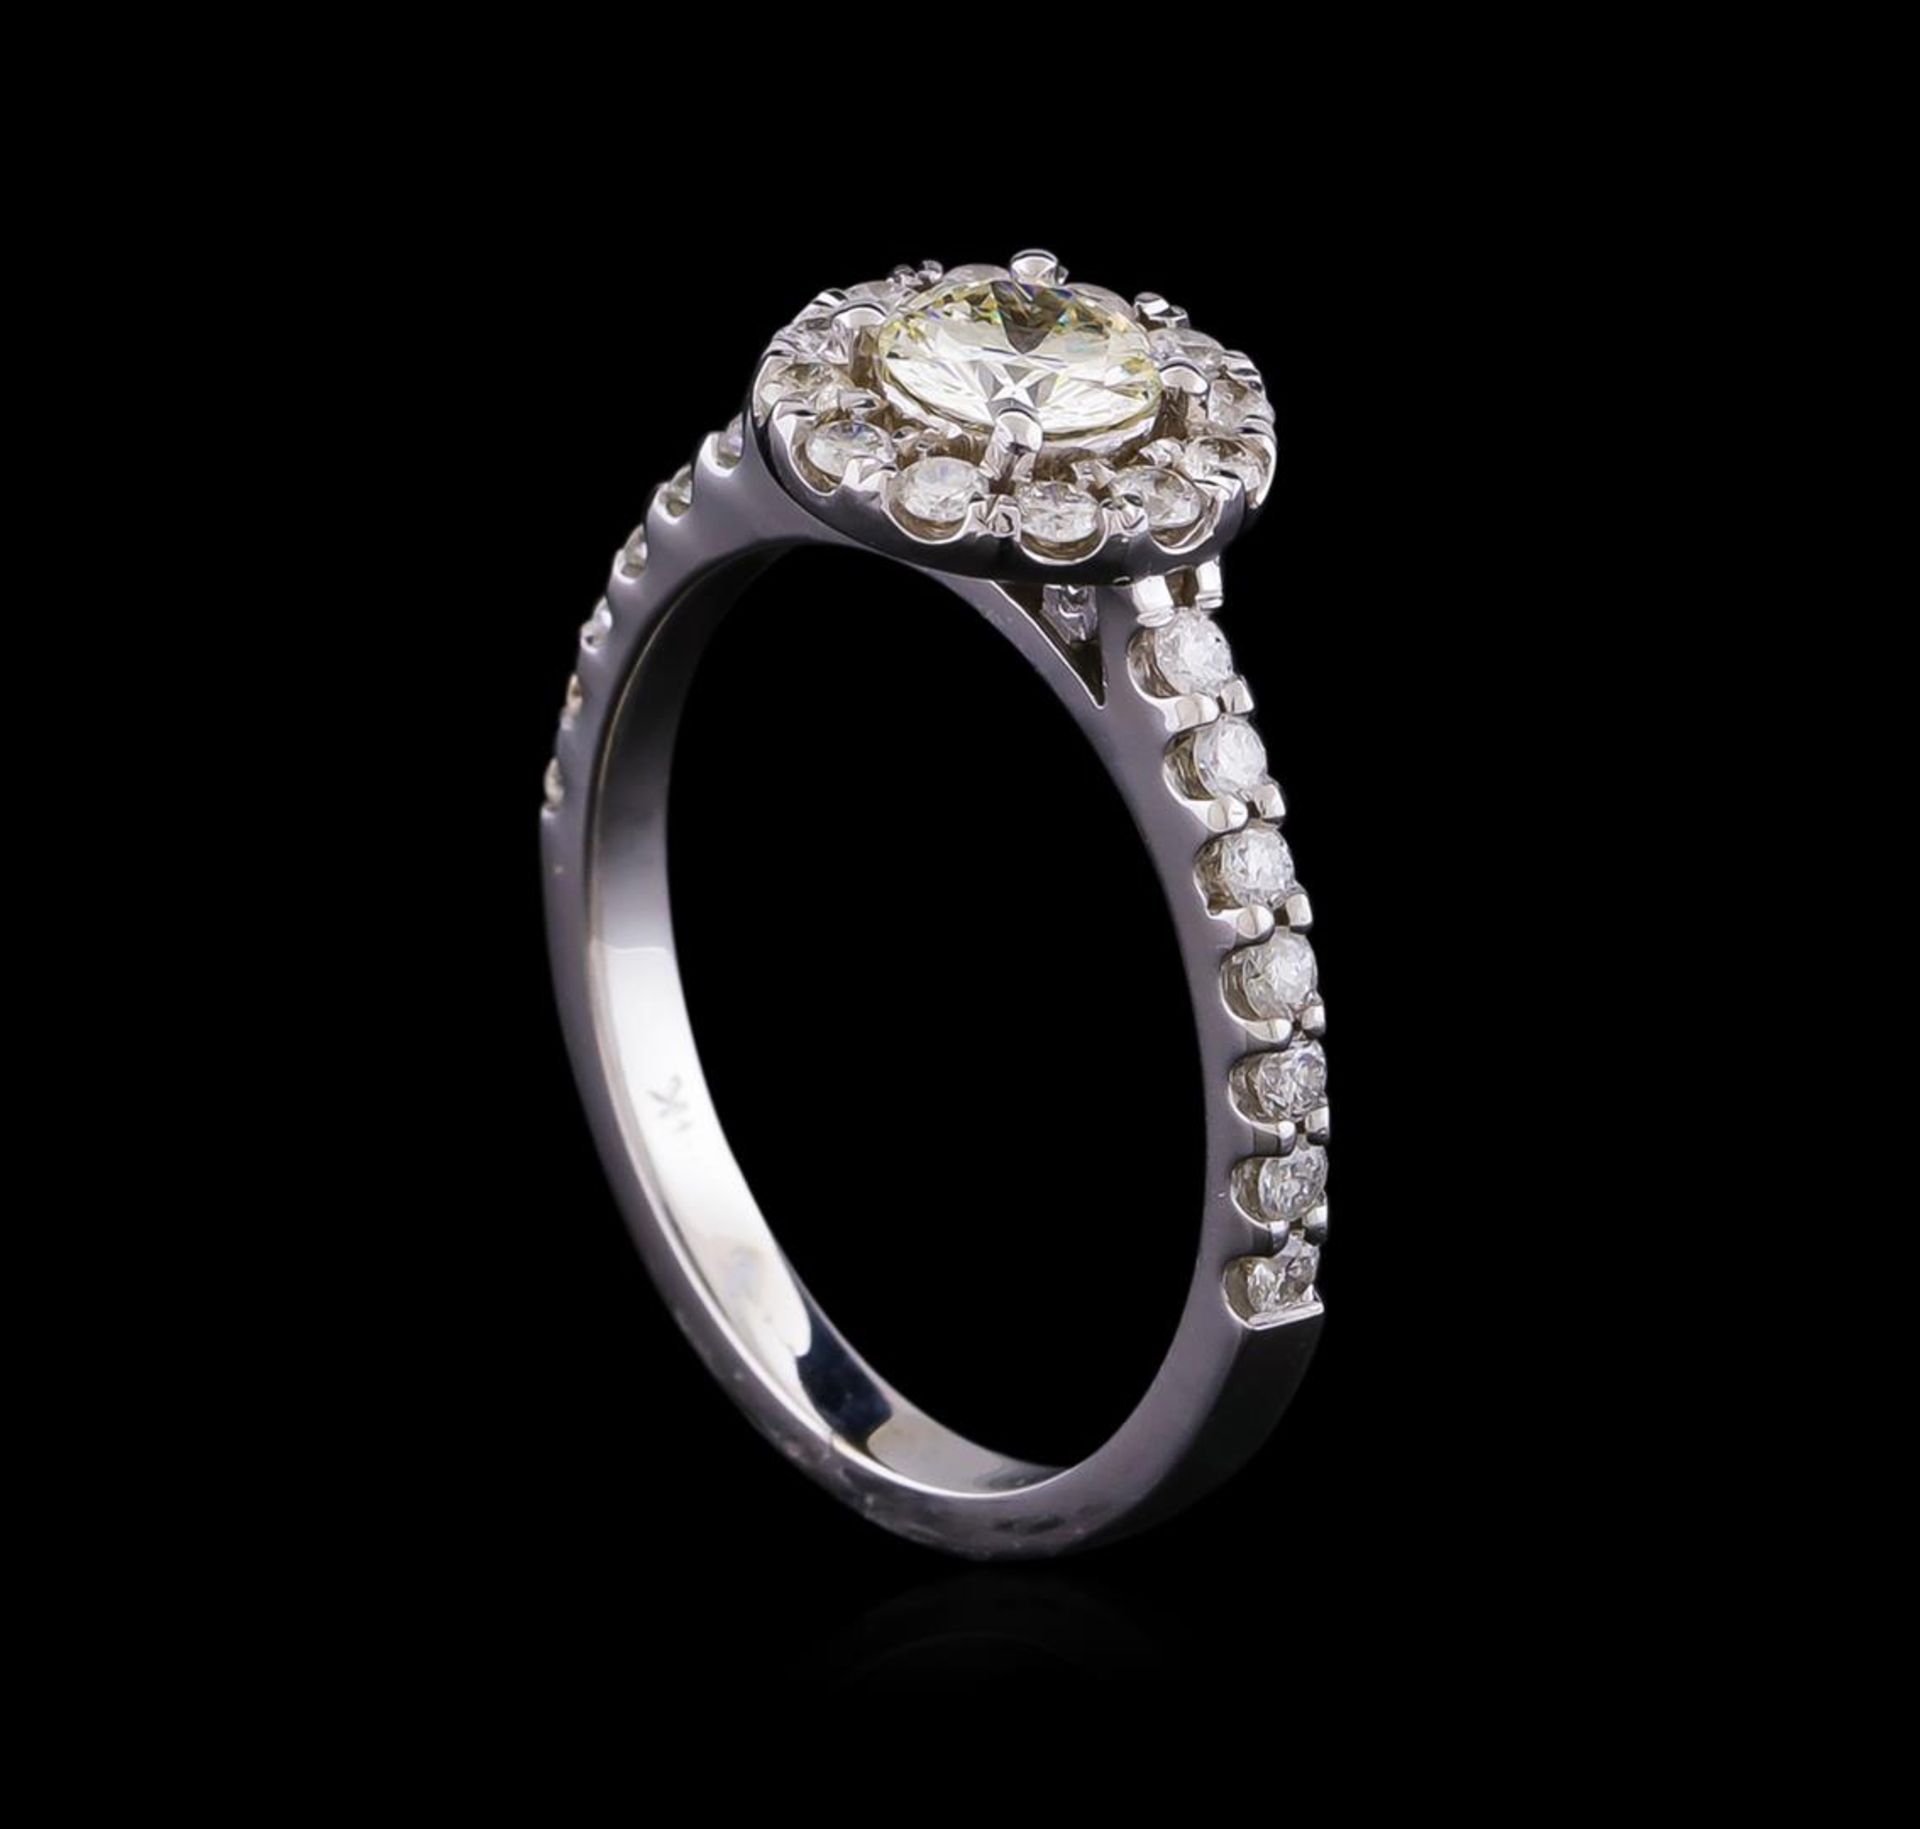 0.87 ctw Diamond Ring - 14KT White Gold - Image 4 of 4